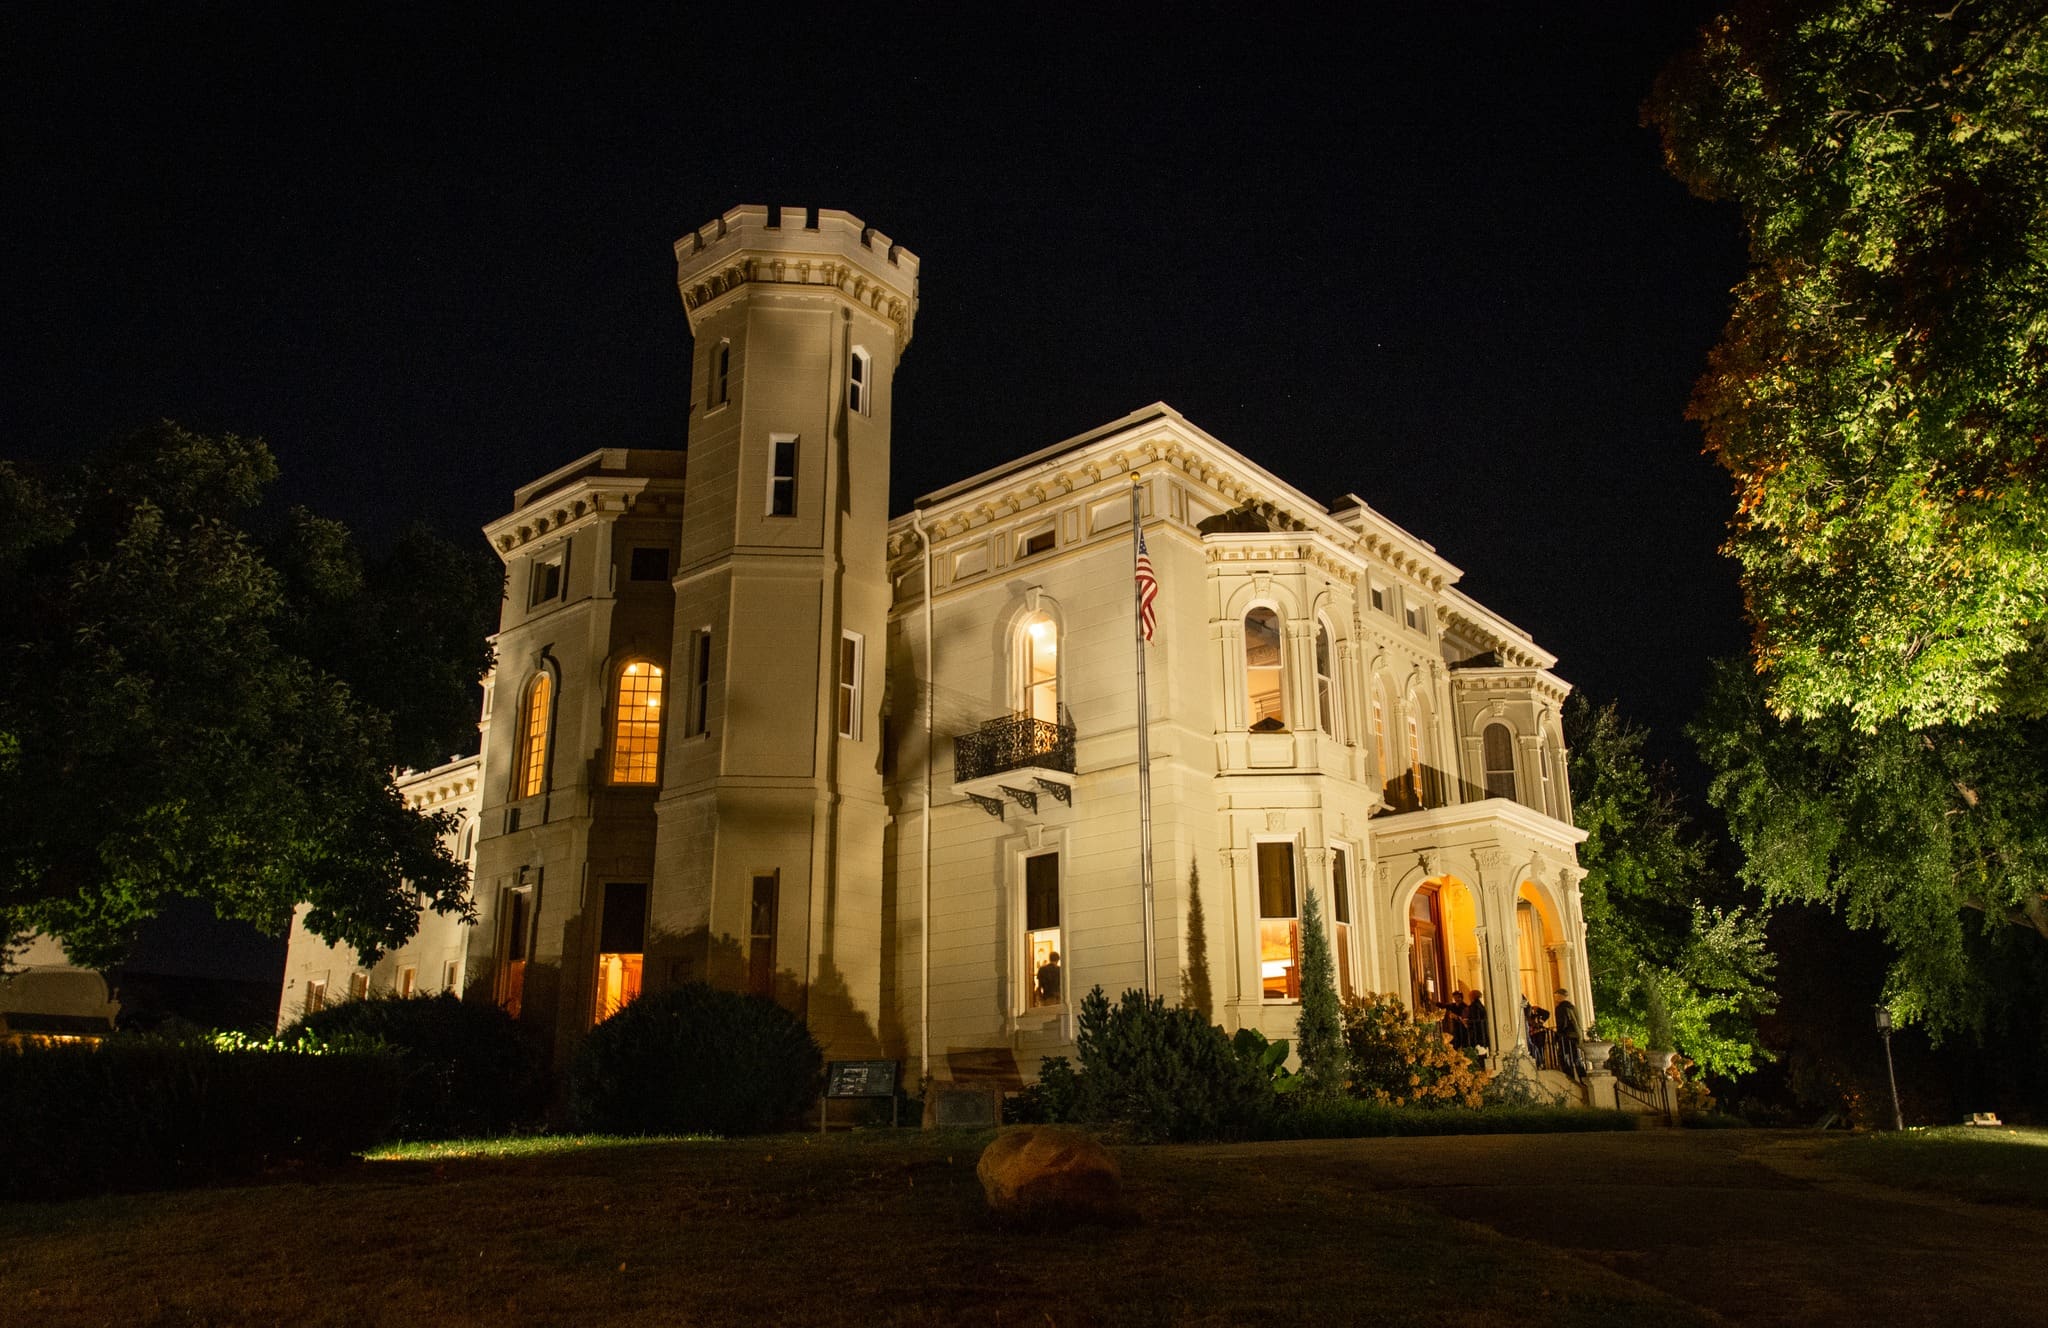 Wyeth-Tootle Mansion – St. Joseph, Missouri - Paranormal Events